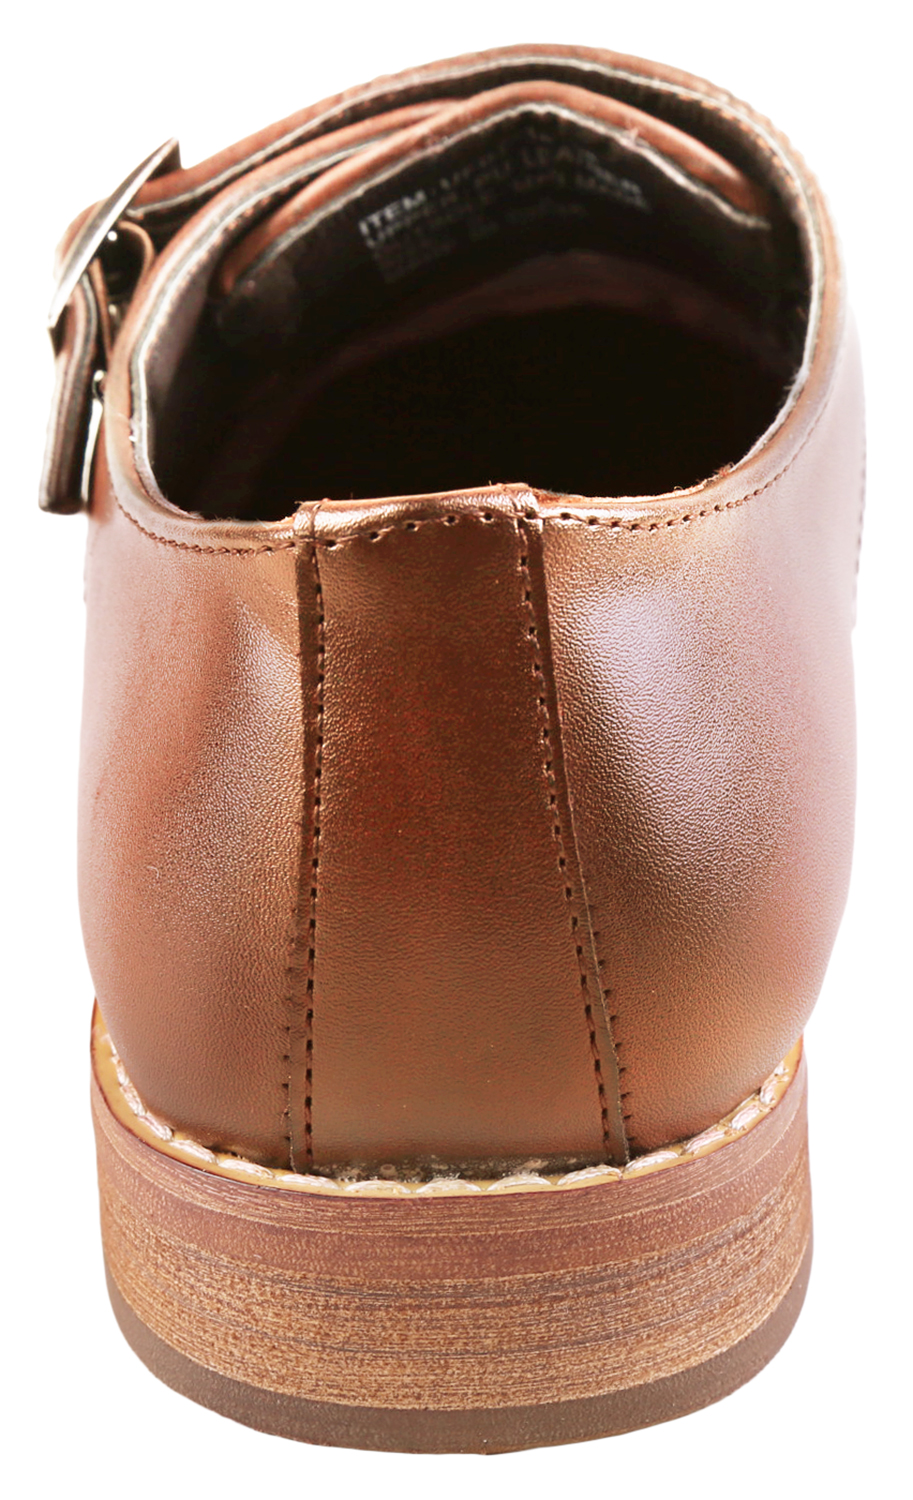 Urban Fox Allen Men's Dress Shoe | Double Monk Strap | Brogue | Wingtip Shoes for Men | Light Brown 12 M US - image 4 of 7